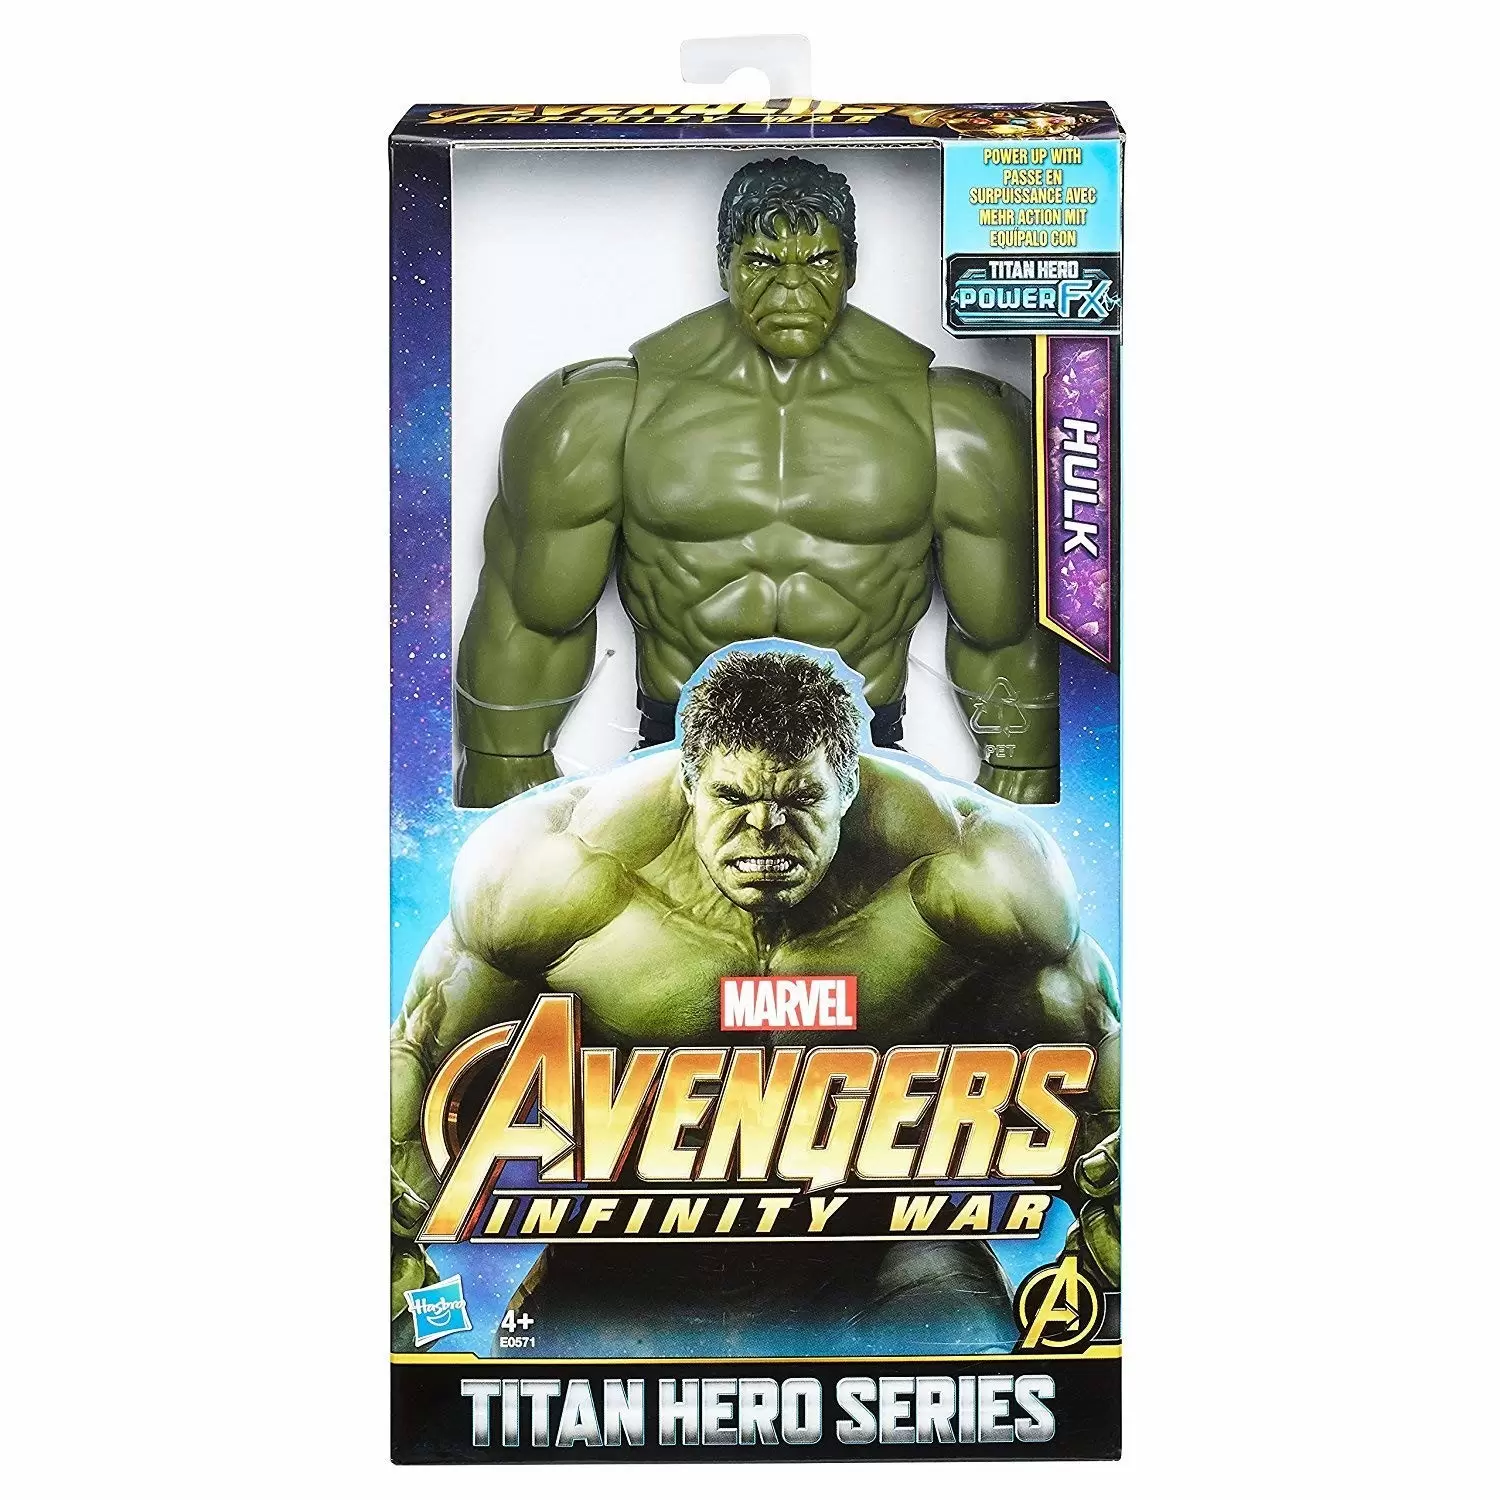 Titan Hero Series - Hulk Power FX - Avengers Infinity Wars